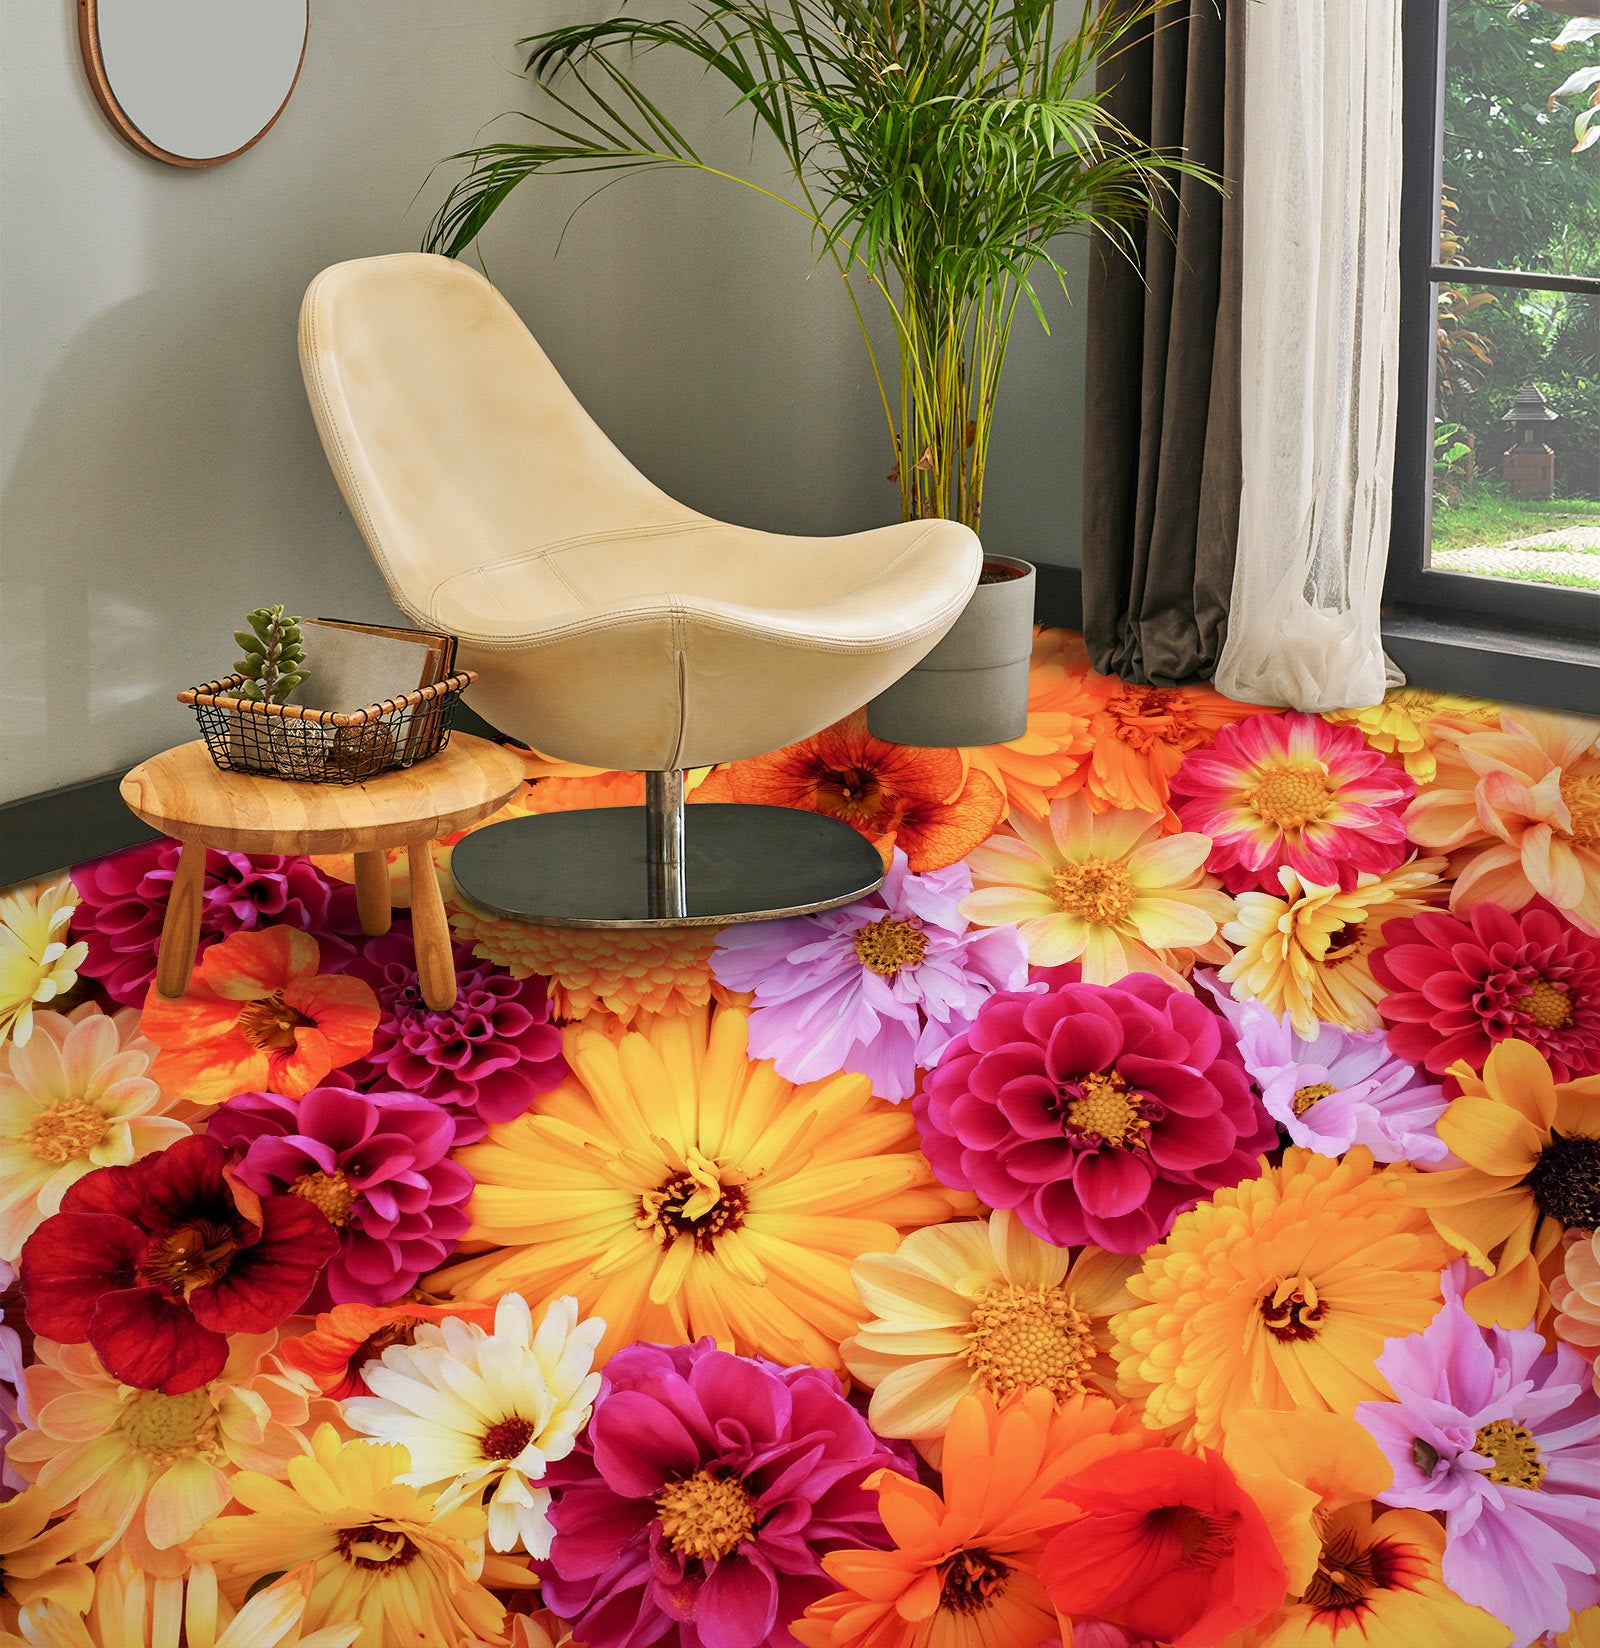 3D Auspicious Chrysanthemum 416 Floor Mural  Wallpaper Murals Rug & Mat Print Epoxy waterproof bath floor